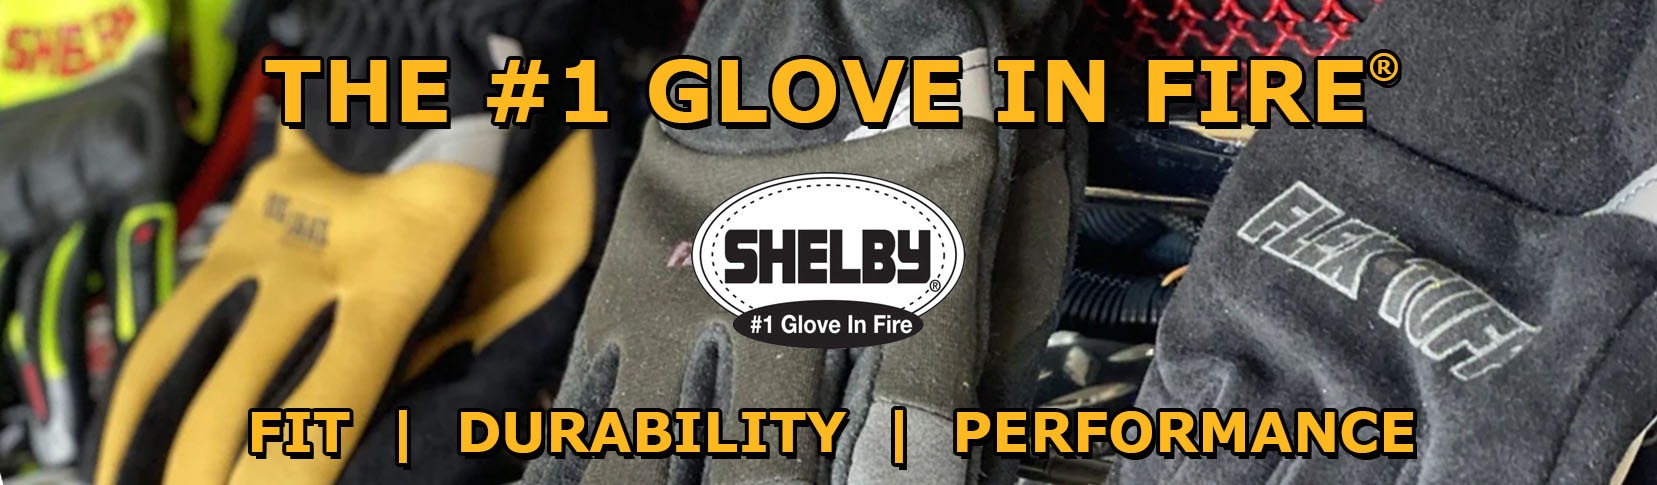 Shelby Glove